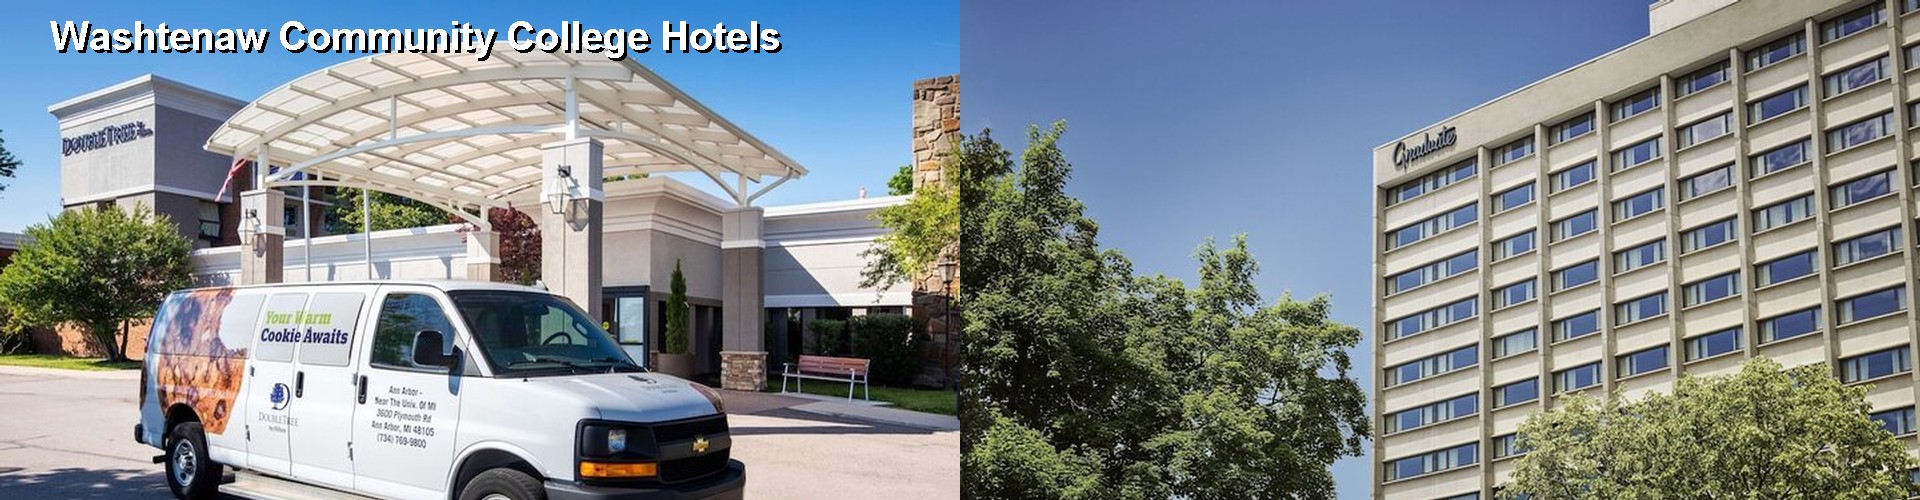 5 Best Hotels near Washtenaw Community College